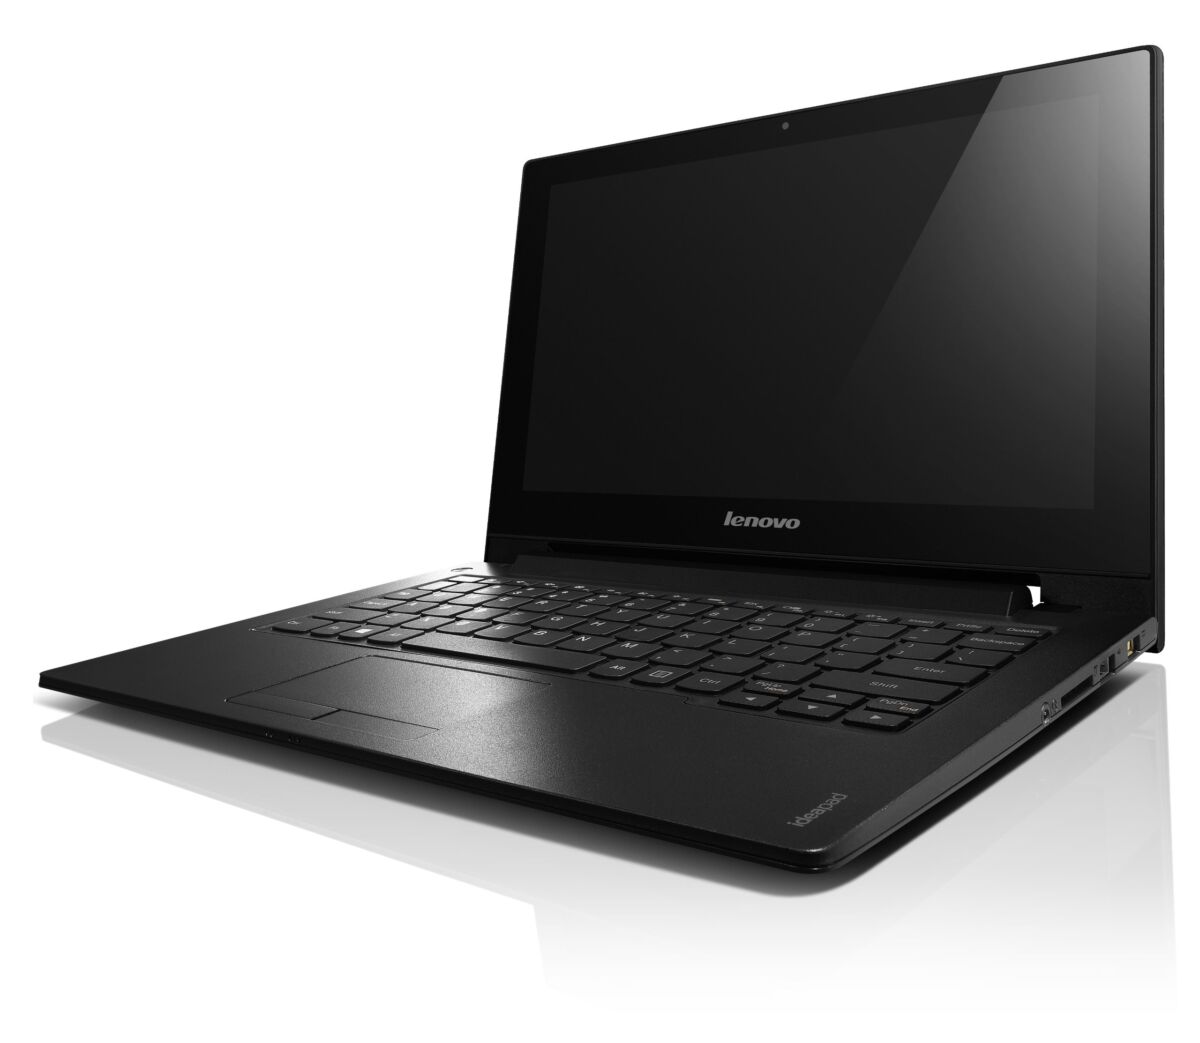 Lenovo IdeaPad S210 59387503 Touchscreen Laptop (Windows 8, Intel Pentium 2127U 1.9 GHz, 11.6″ LED-lit Screen, Storage: 500 GB, RAM: 4 GB) Black | The Storepaperoomates Retail Market - Fast Affordable Shopping